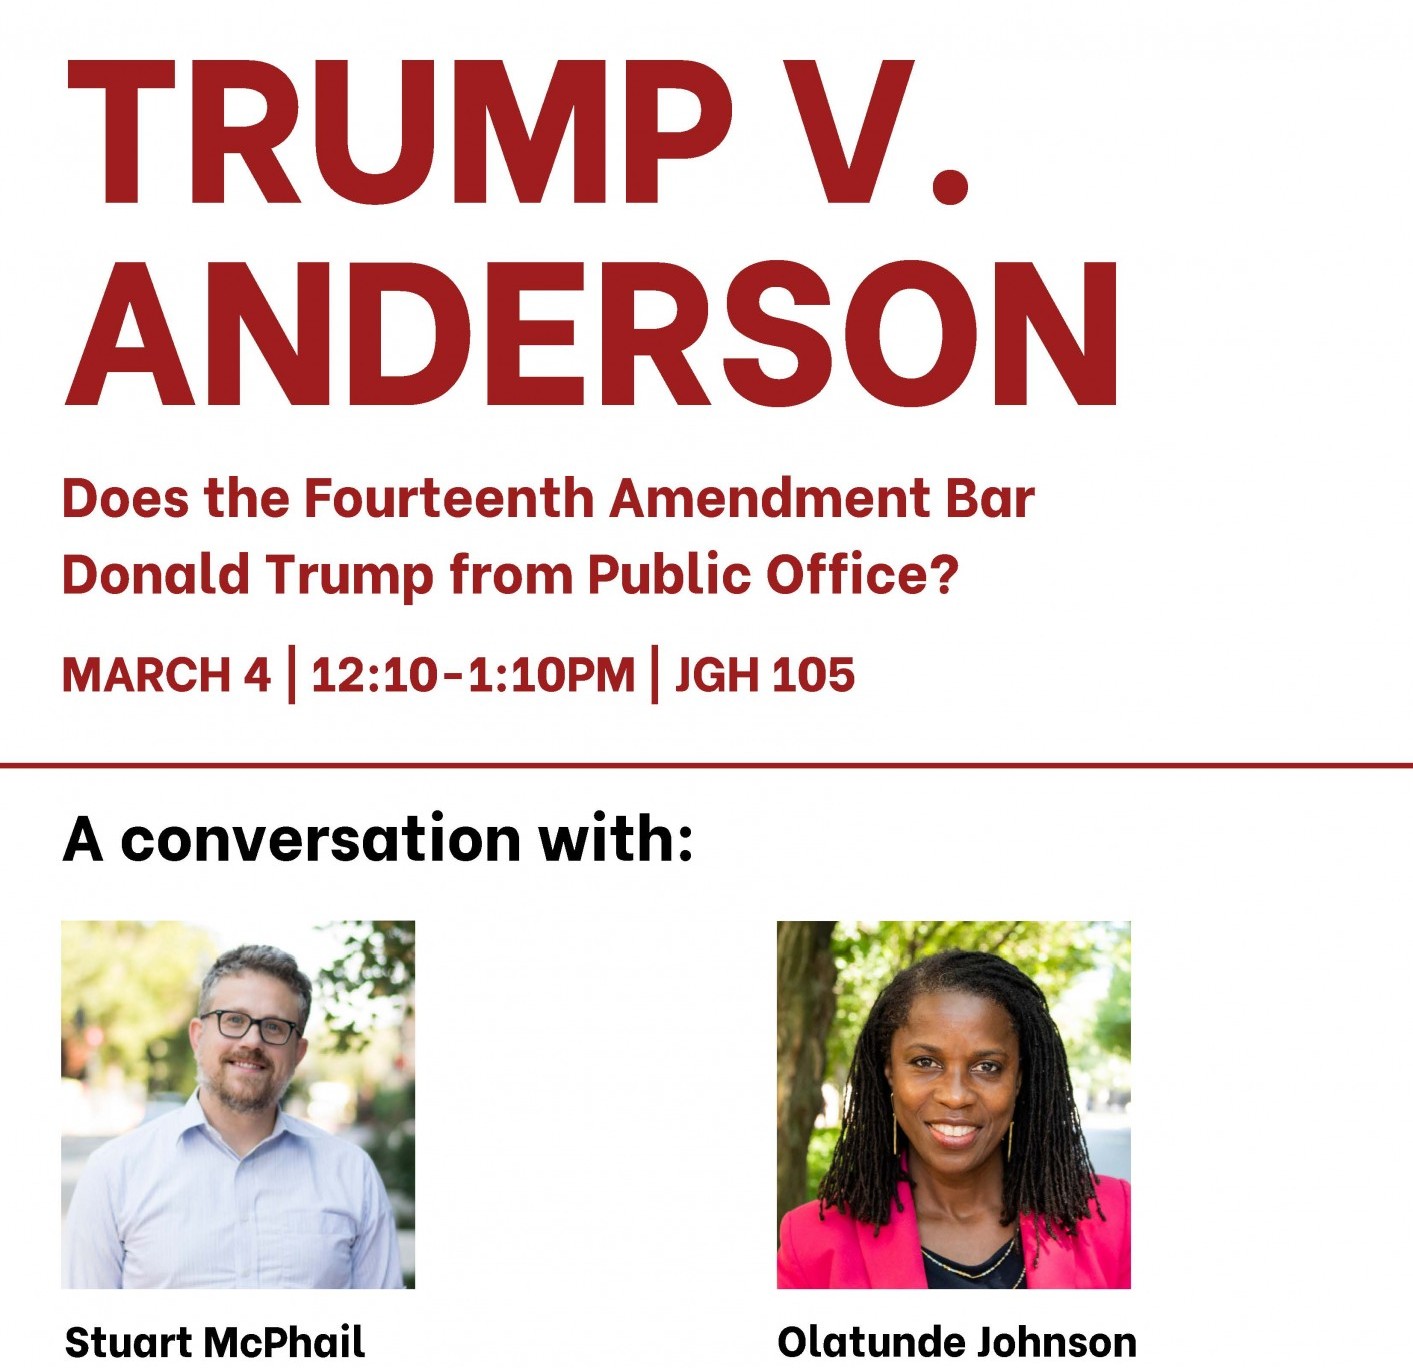 Trump v. Anderson event poster